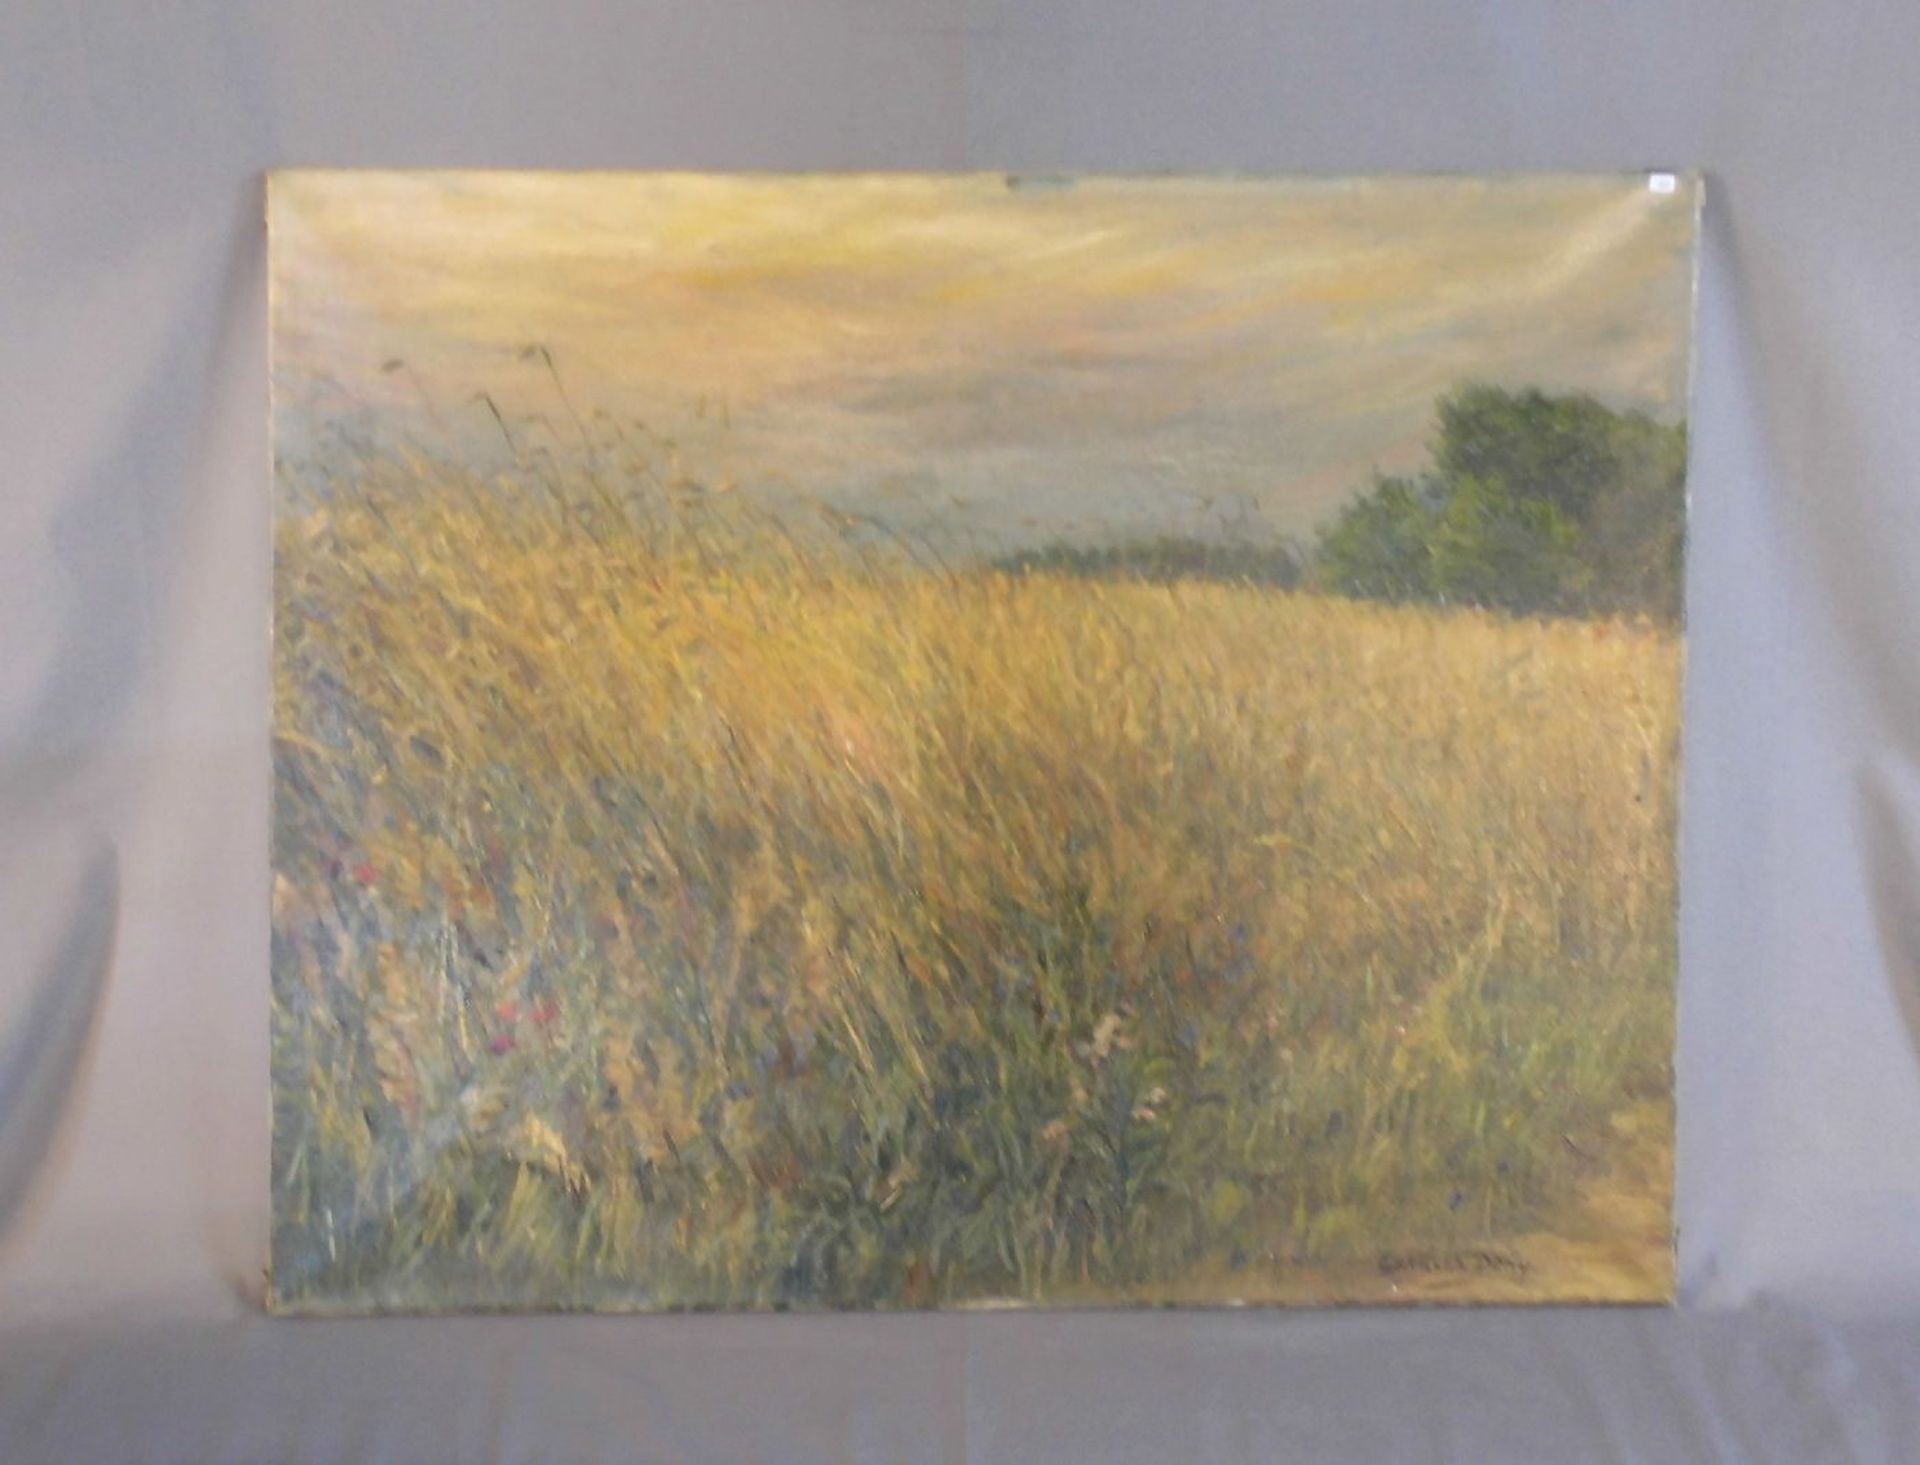 DONY, CHARLES J. N. (19./20. Jh.), Gemälde / painting: "Getreidefeld", Öl auf Leinwand / oil on